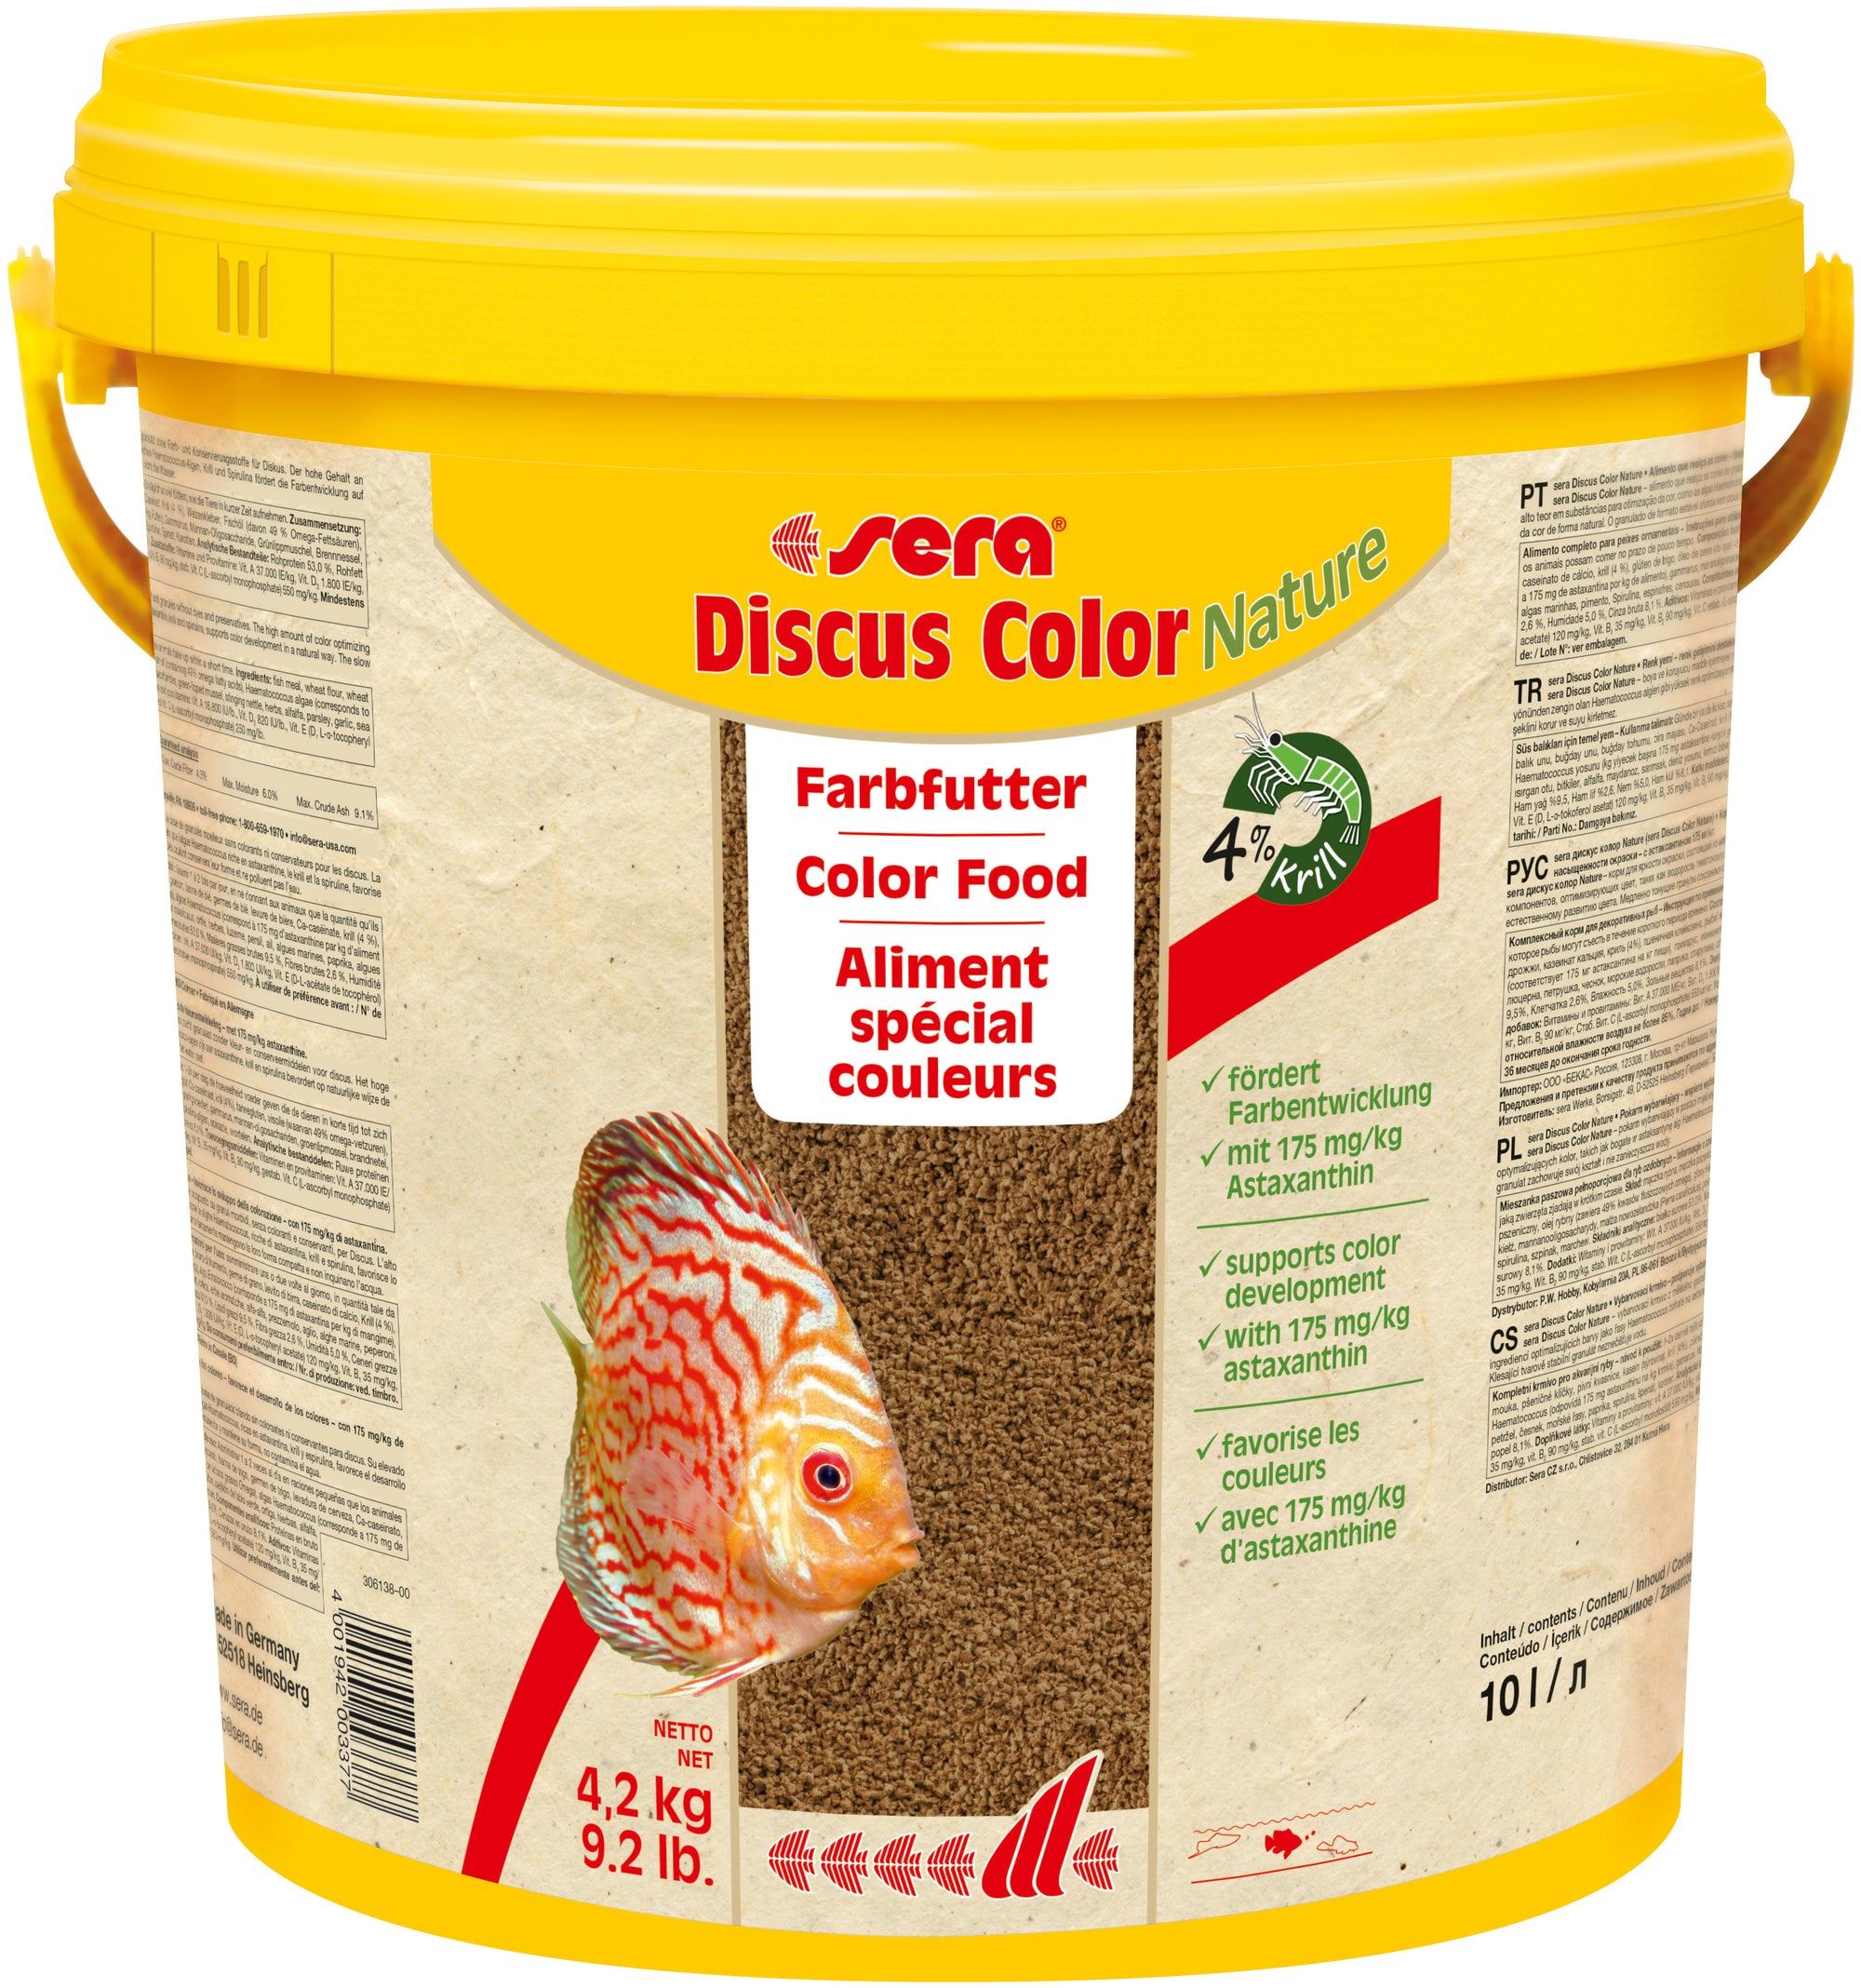 Discus Granulat Nature 250 ml (105 g) - buy now